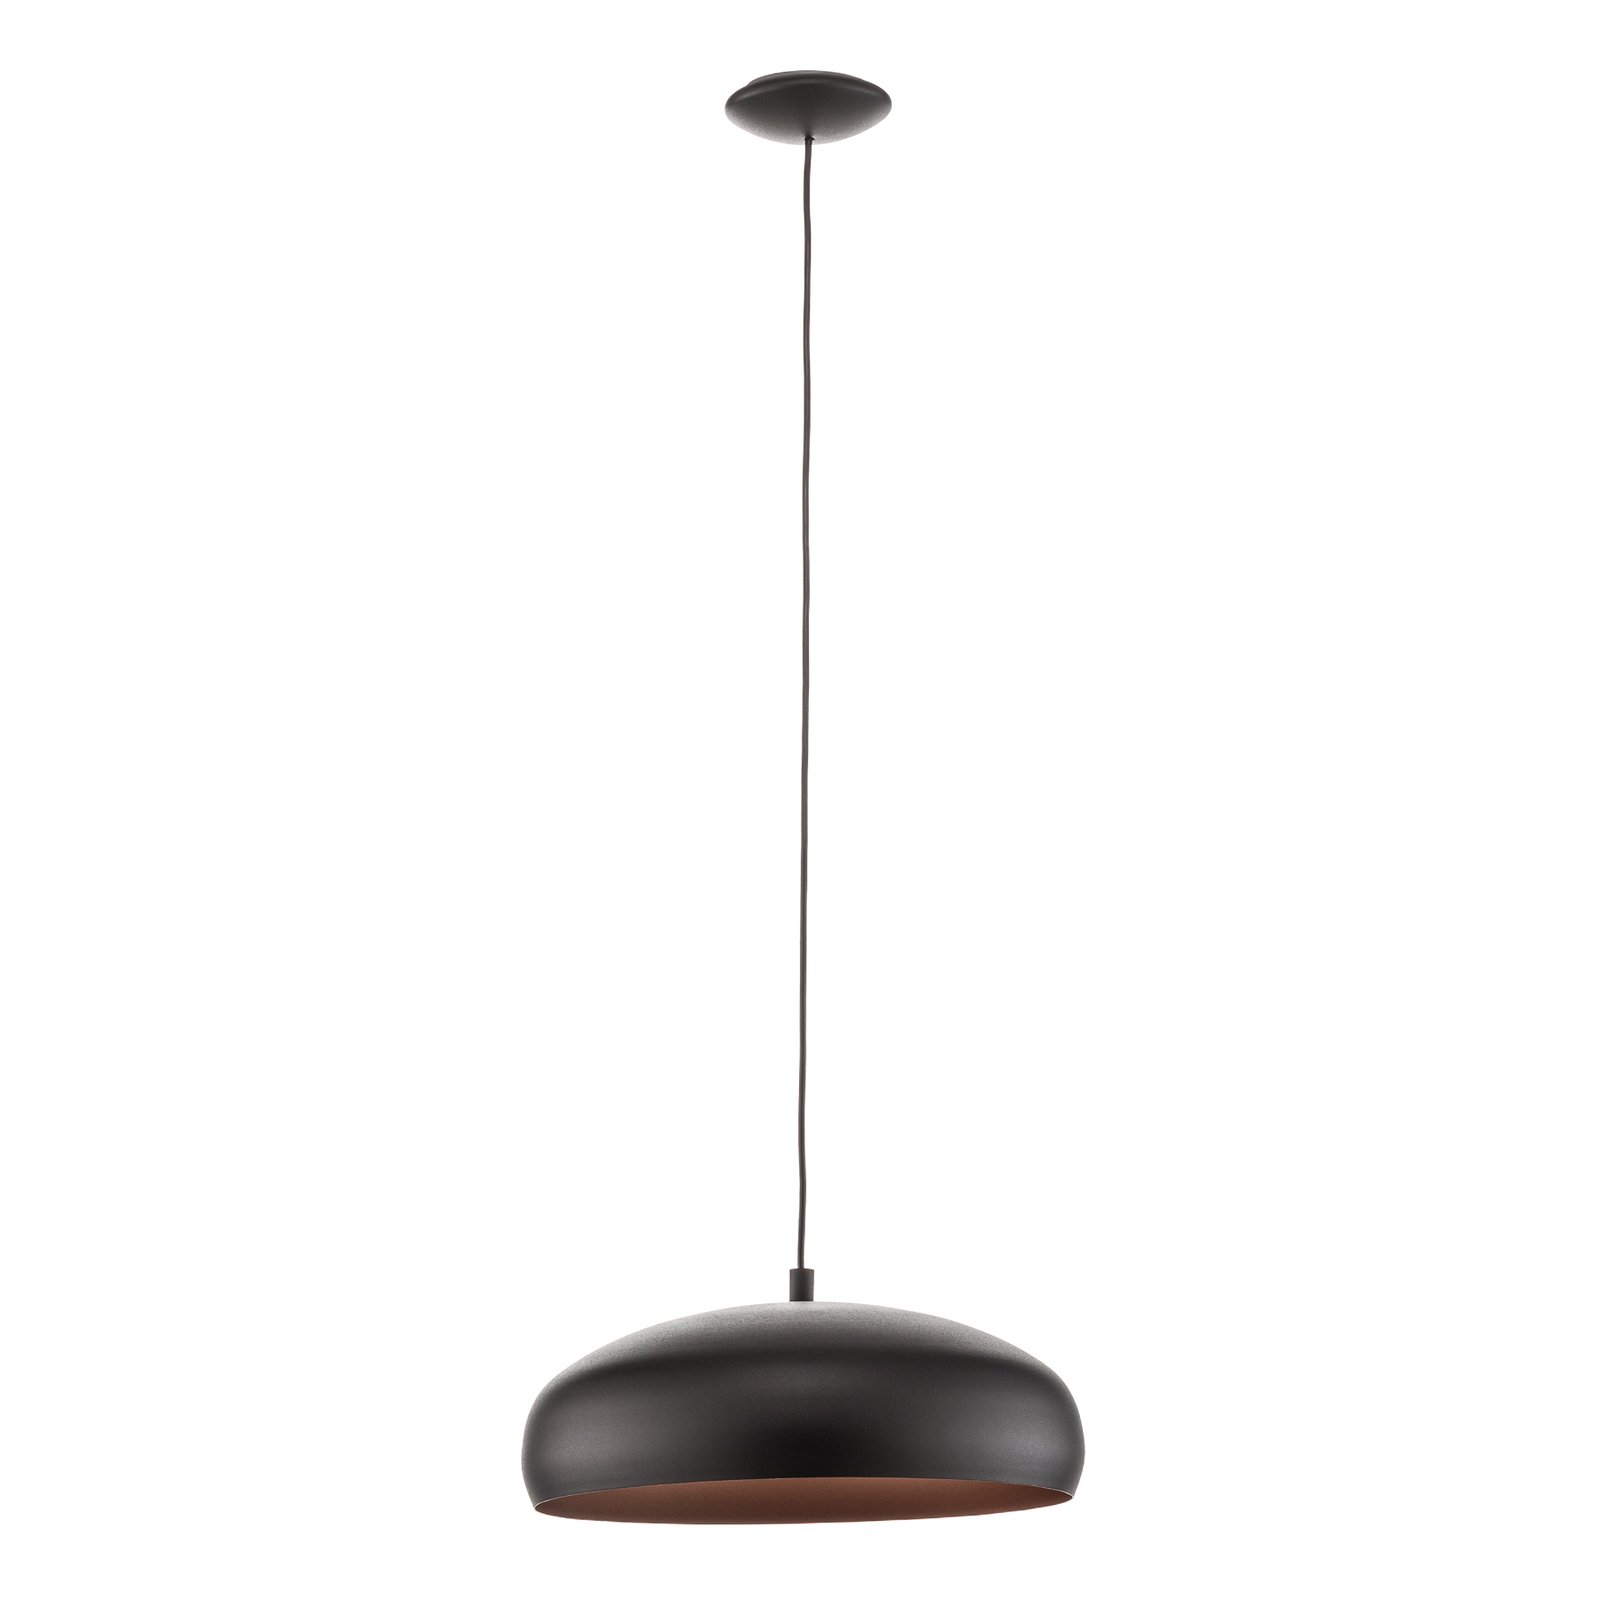 Mogano pendant light with metal shade, black